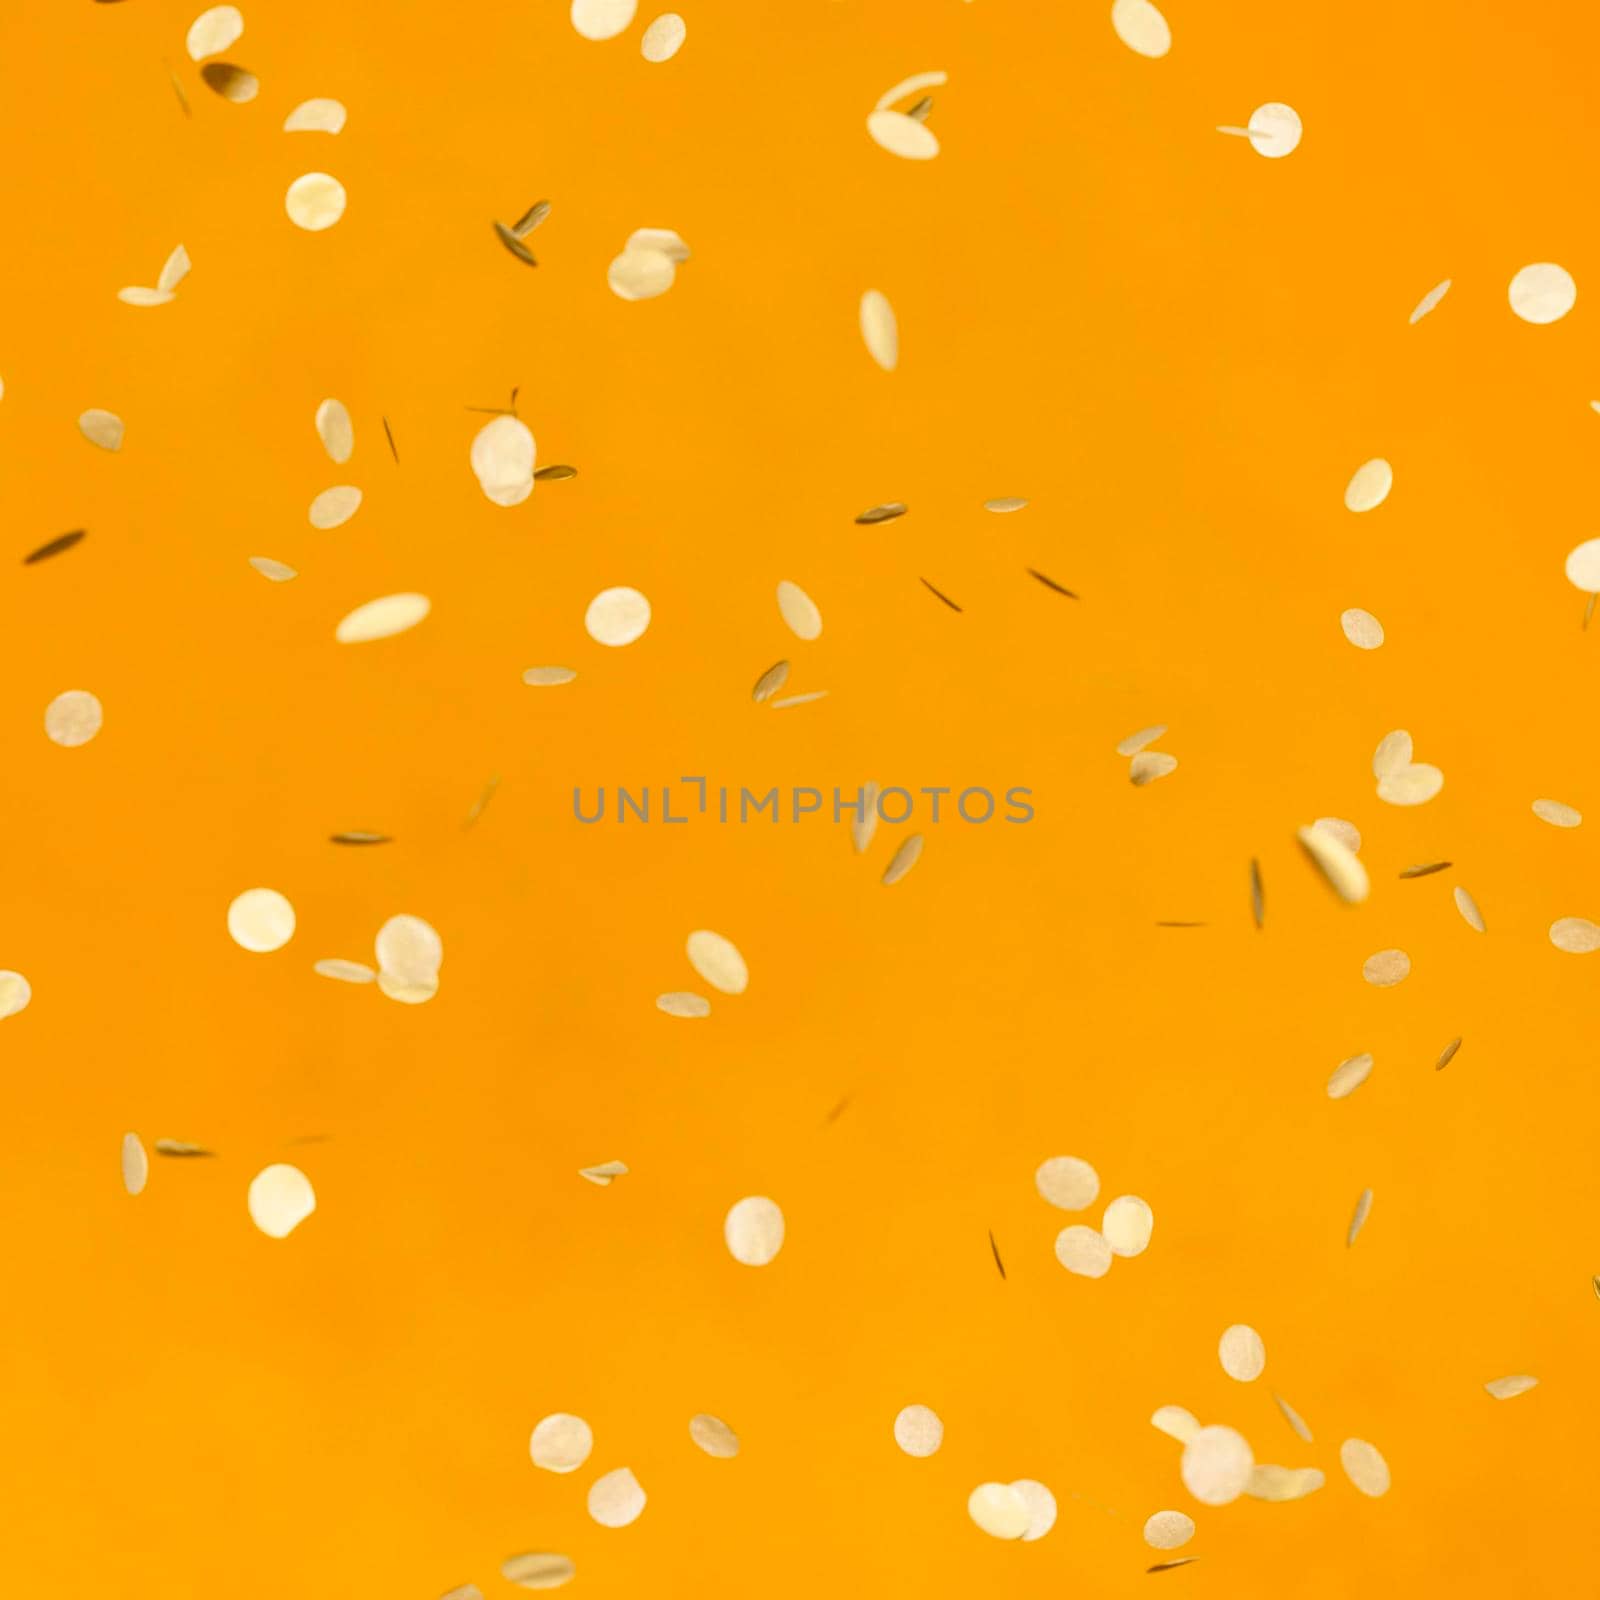 arrangement golden party confetti orange wall. High quality photo by Zahard